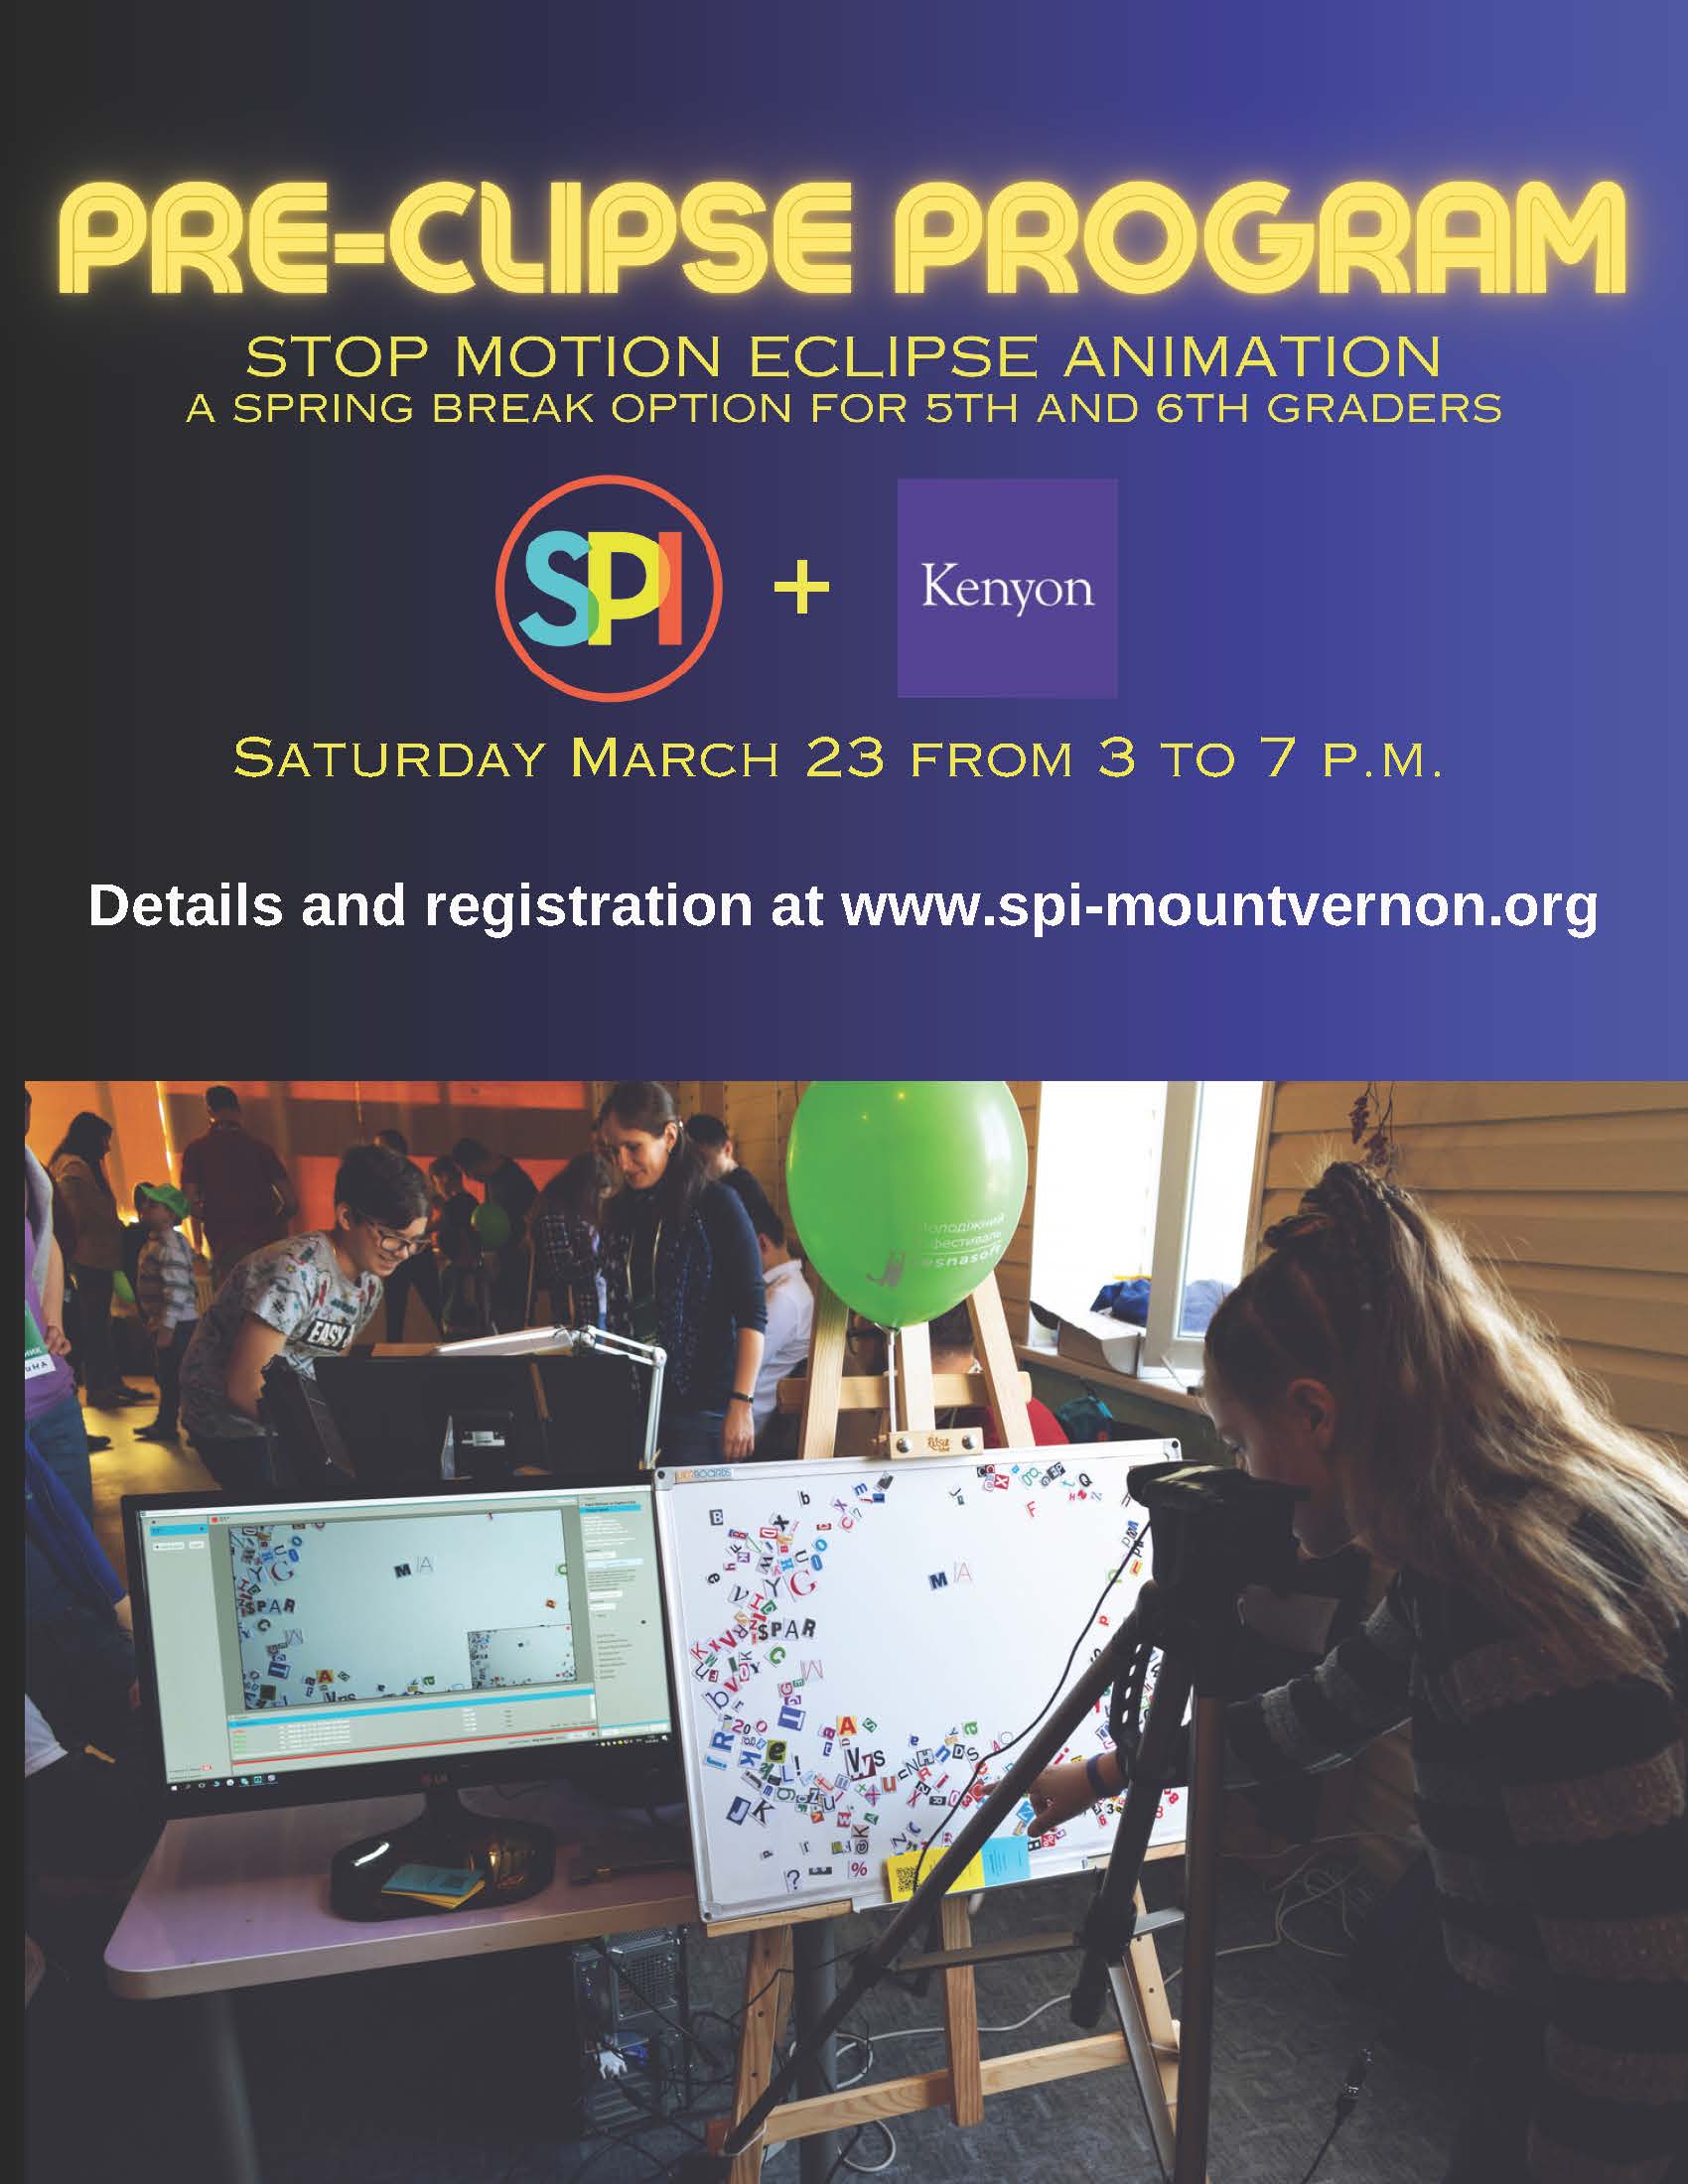 SPI Pre-Eclipse Program button link.